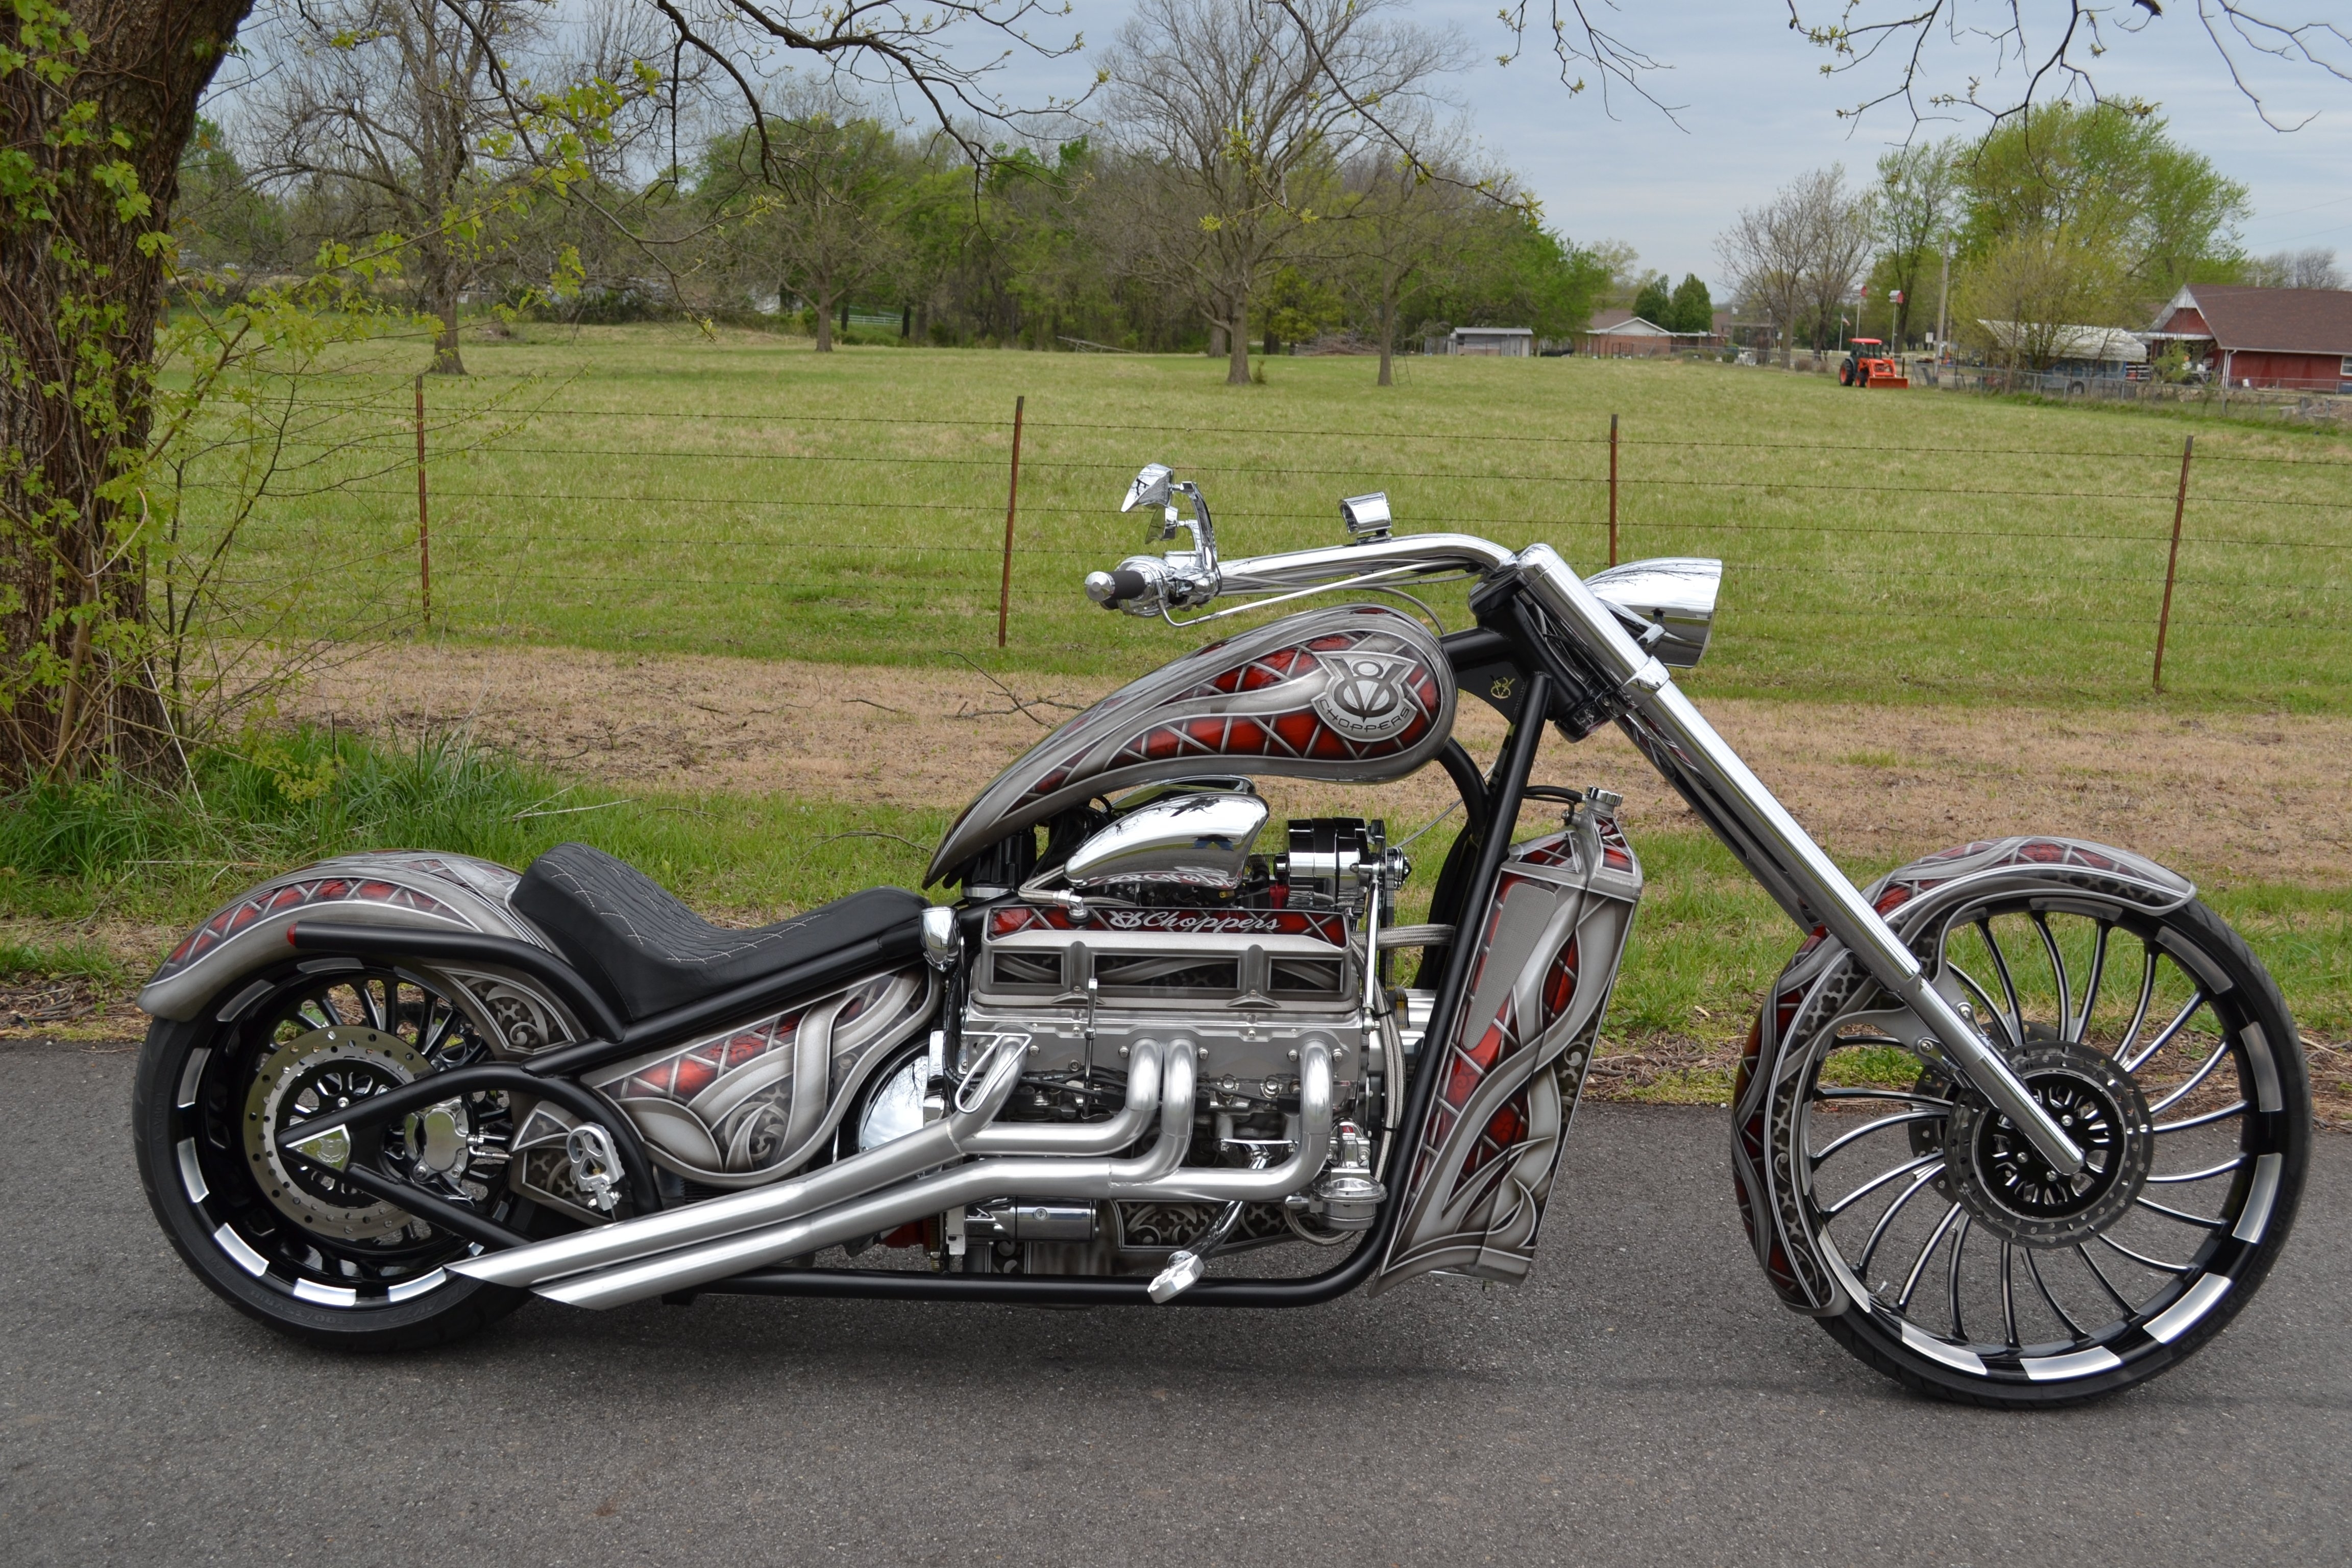 Удлиненные мотоциклы. Мотоцикл чоппер Харлей. Мотоцикл Harley Davidson Chopper. Чопперы Харлей Дэвидсон. Мотоциклы Харлей Дэвидсон чопперы.